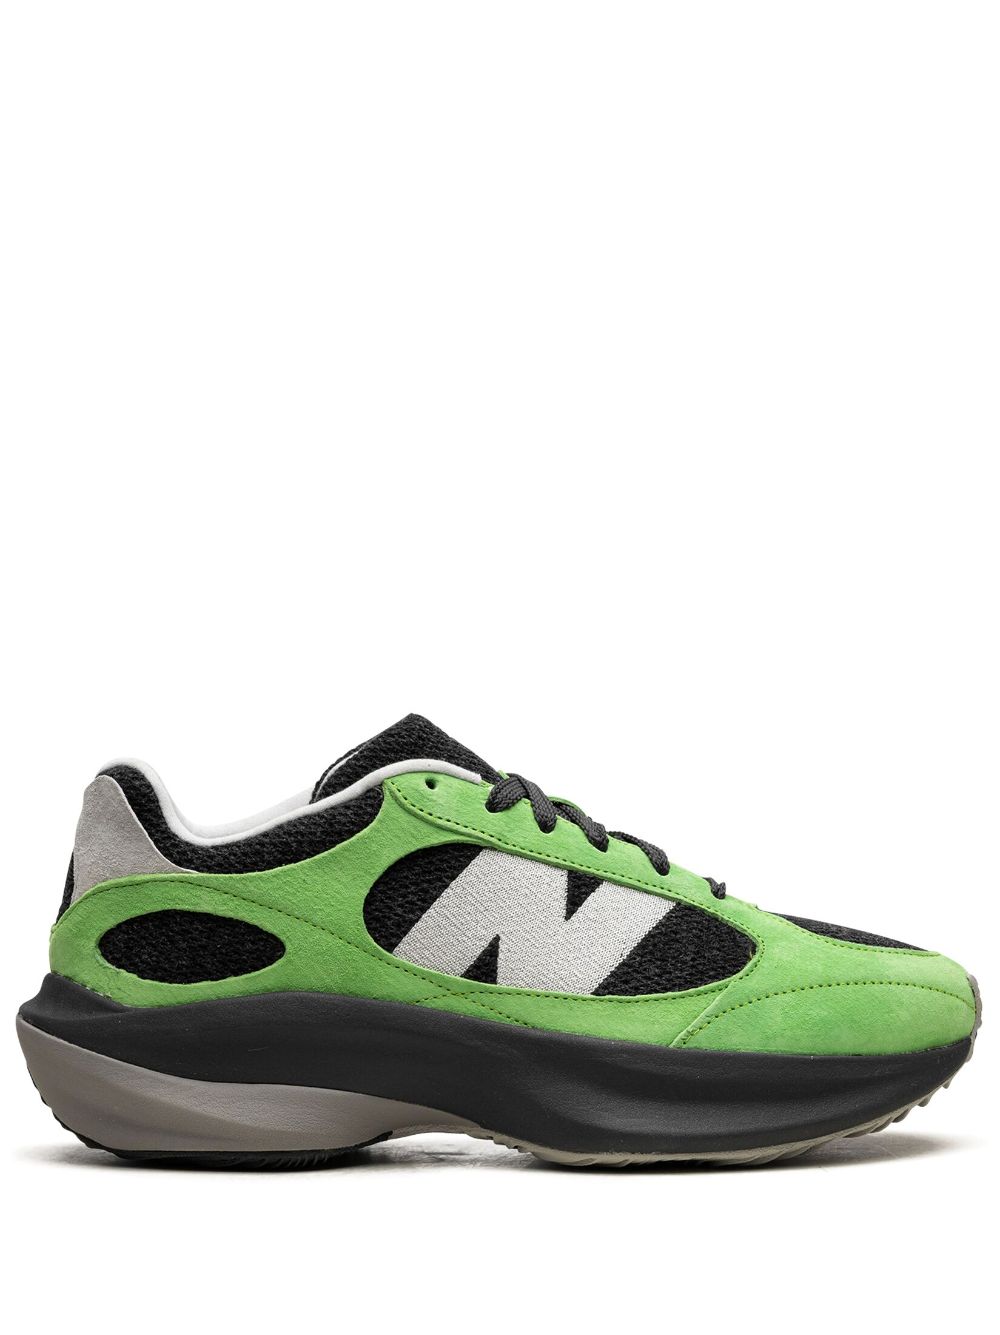 New Balance WRPD Runner "Green/Black" sneakers